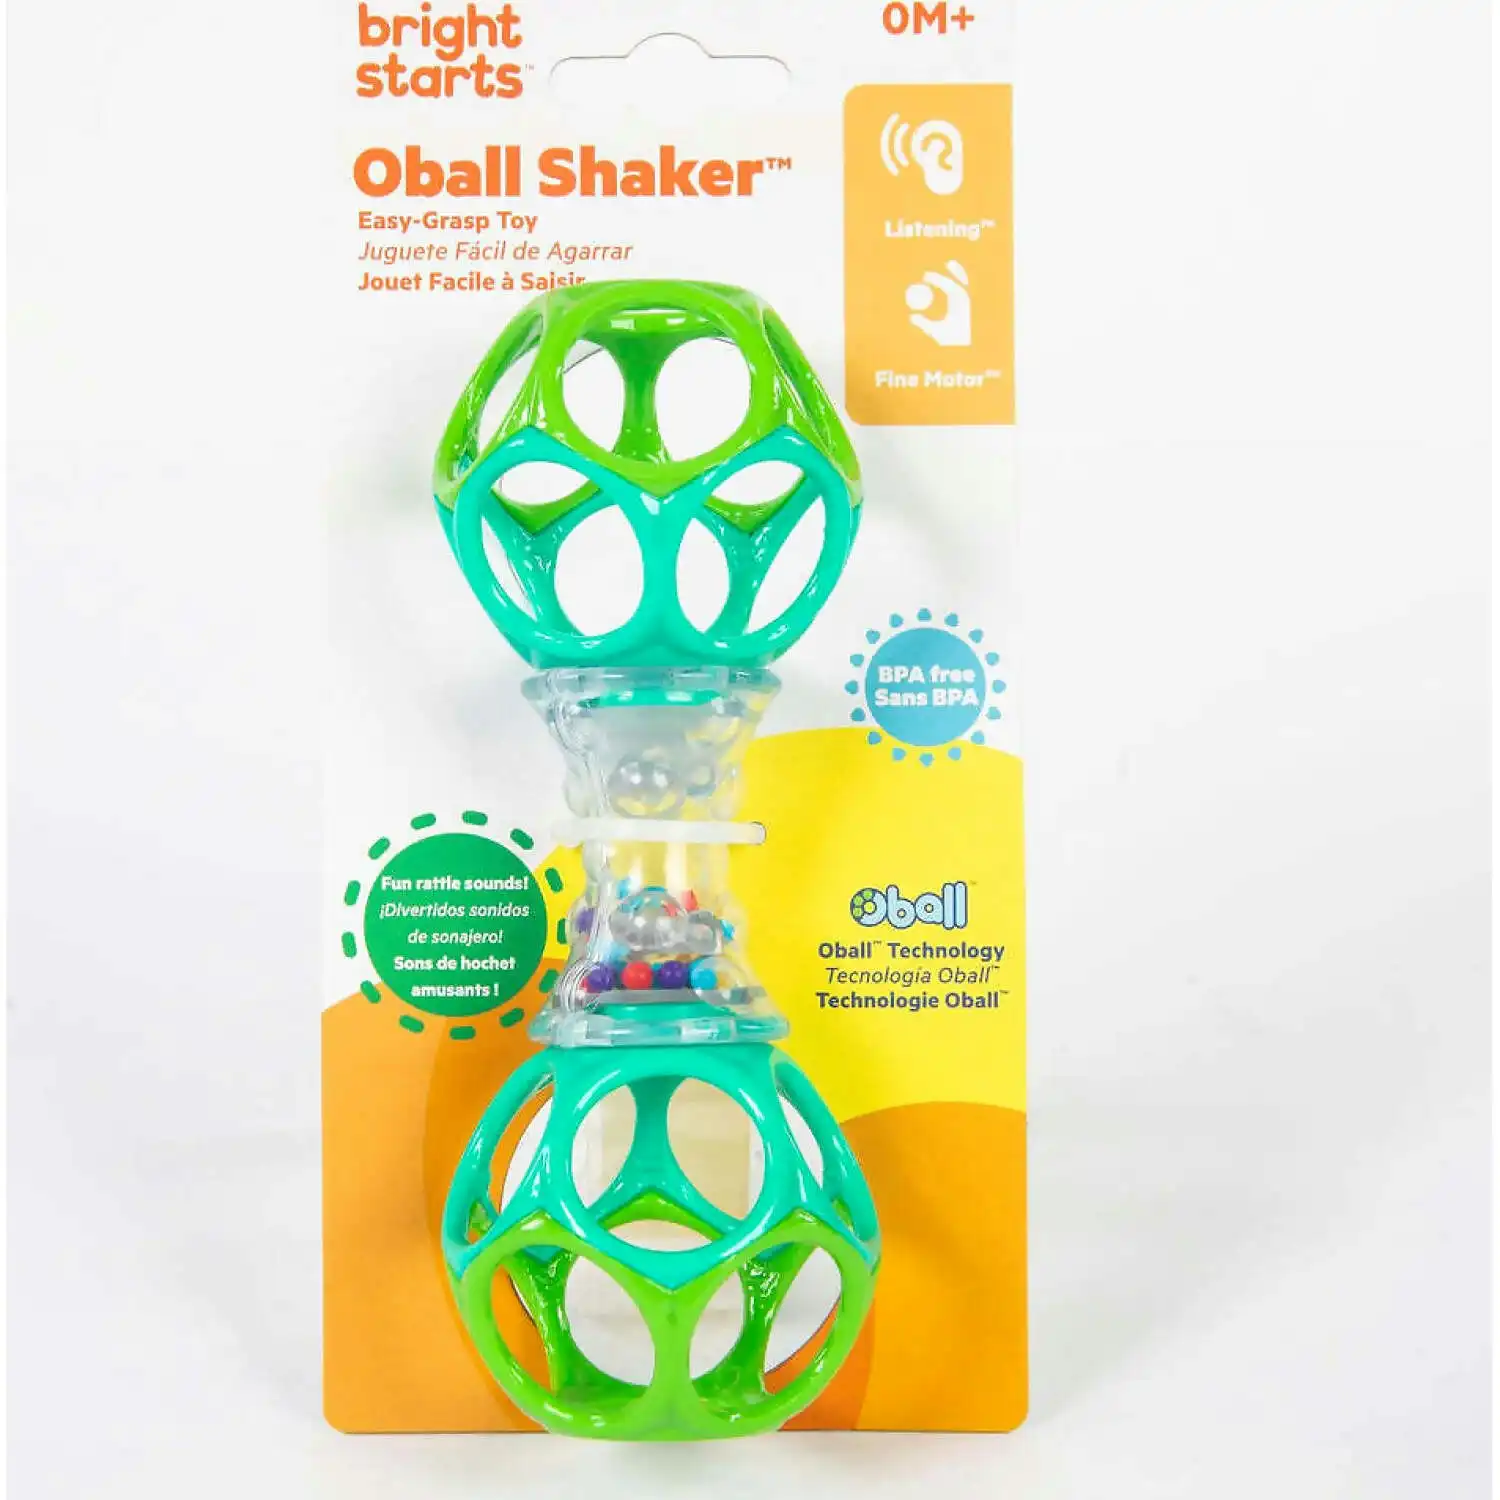 Bright Starts - Oball Shaker